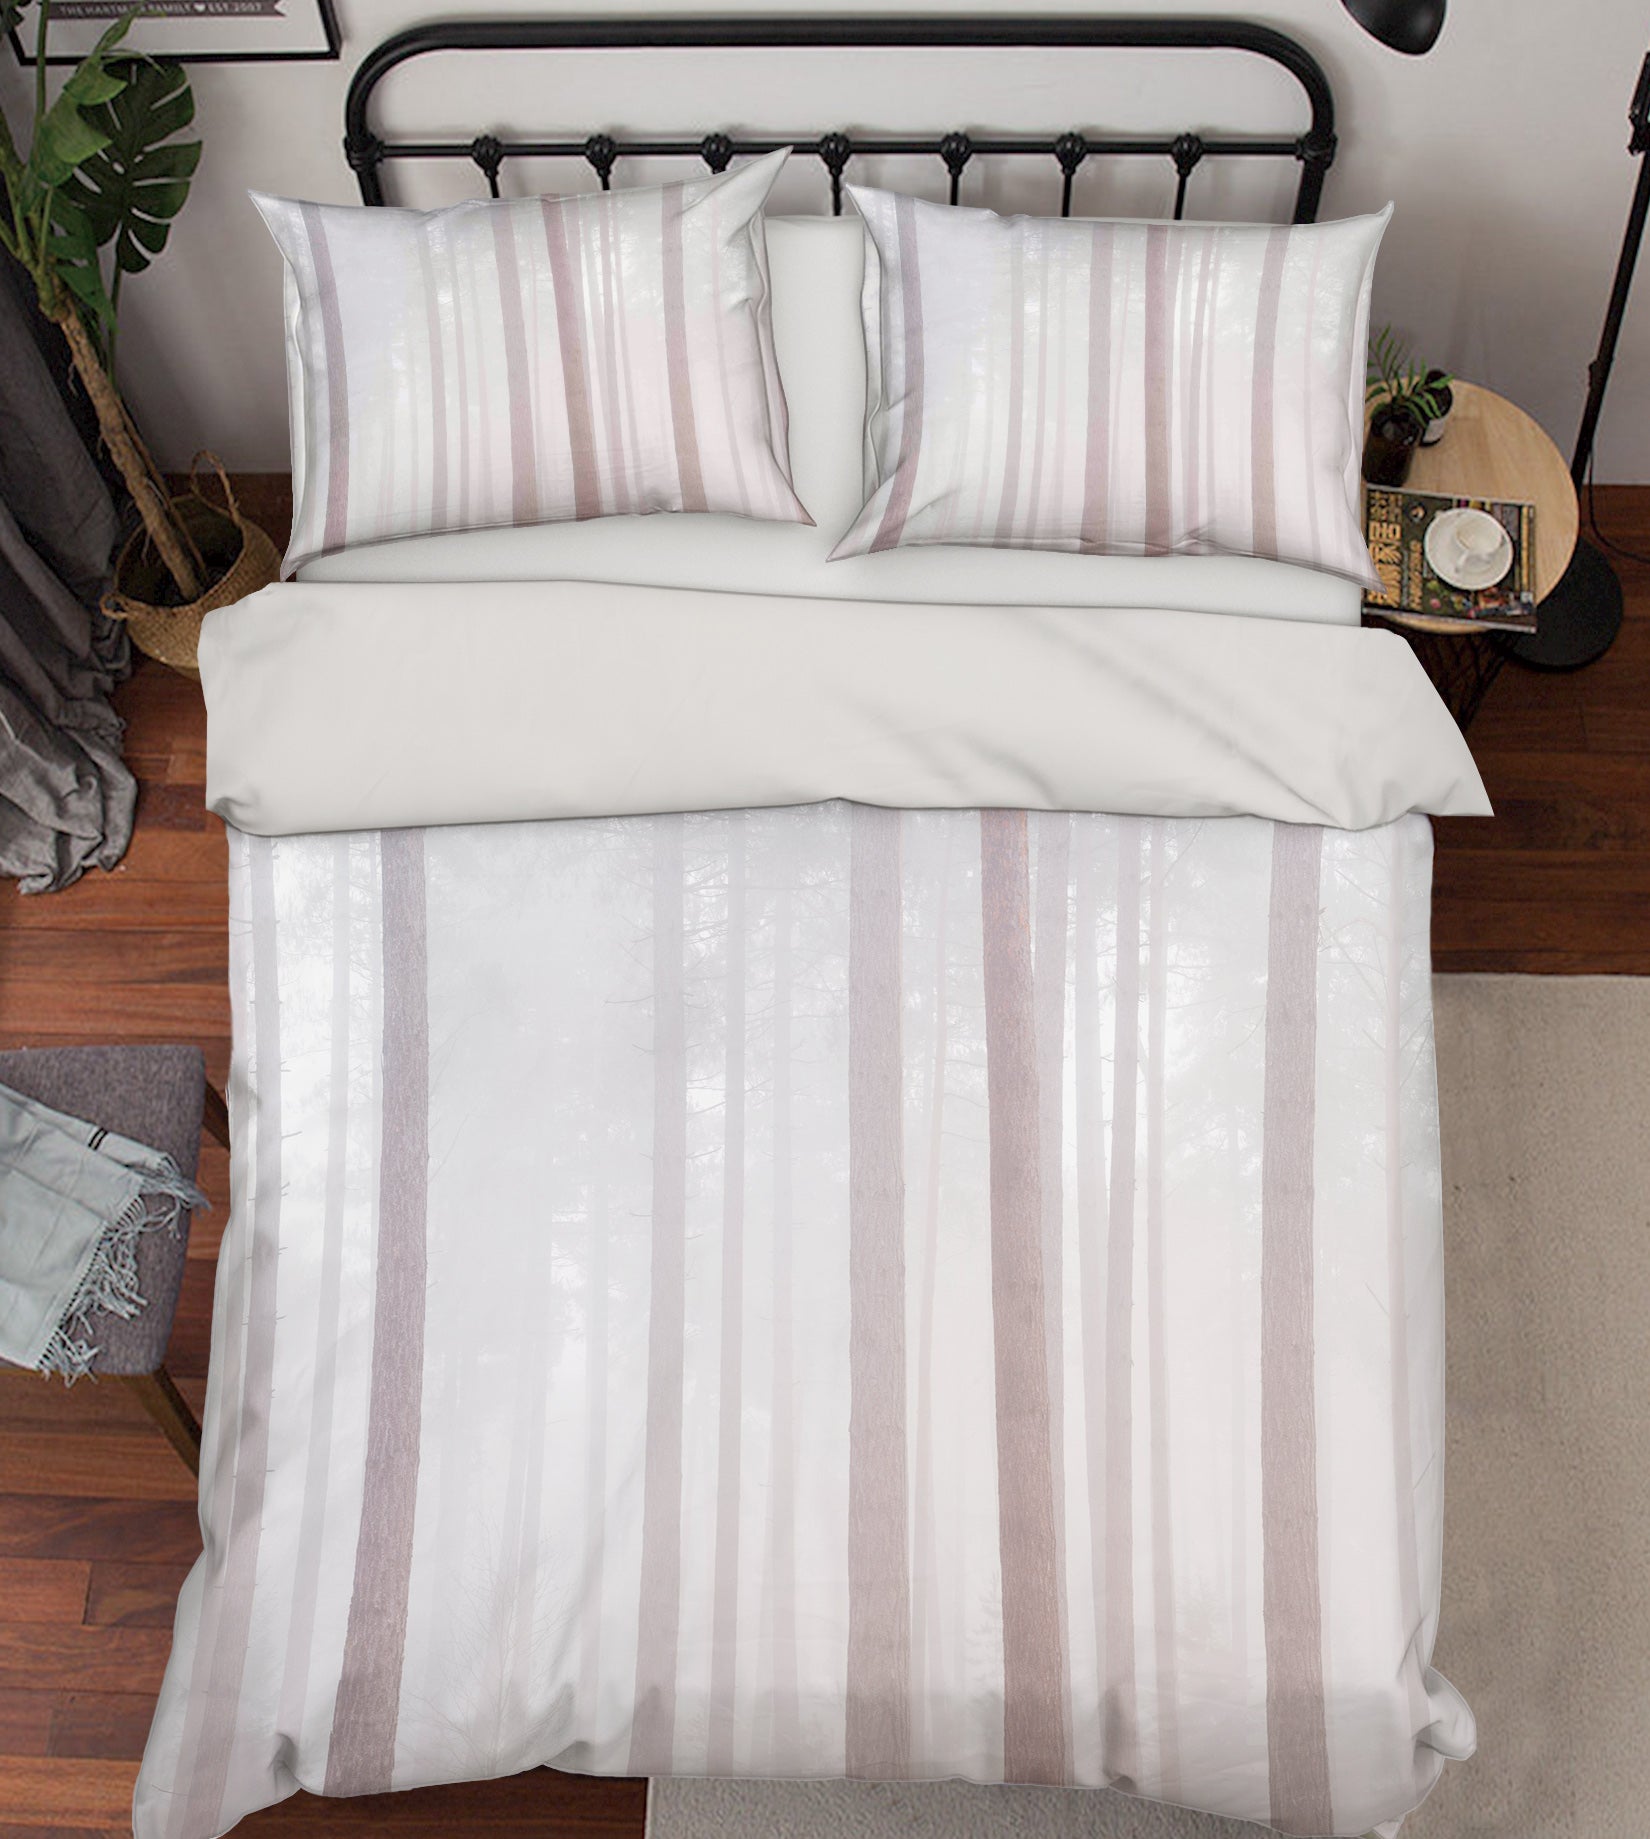 3D Misty Forest 6985 Assaf Frank Bedding Bed Pillowcases Quilt Cover Duvet Cover